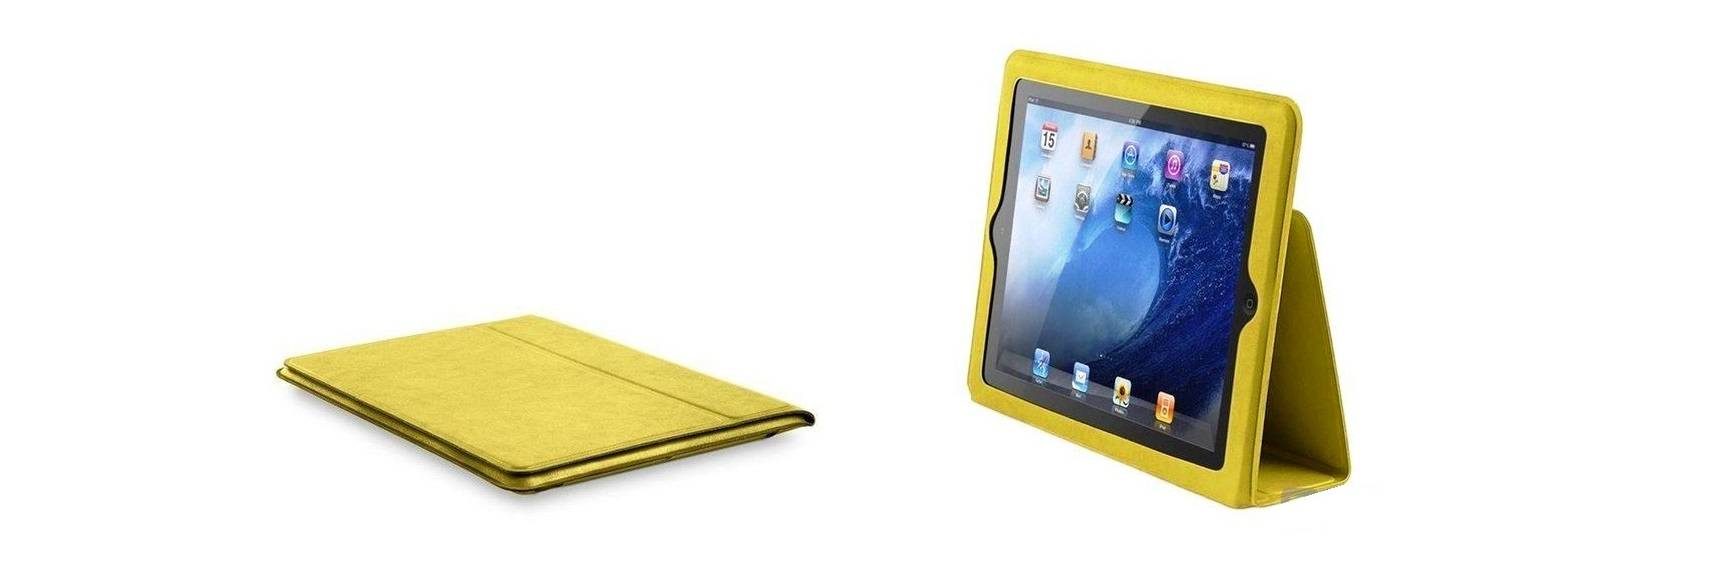 Чехол-книжка для Apple IPad 2, Slim Wrap, искусственная замша, желтый, (240 х 190 х 10 мм), Forward